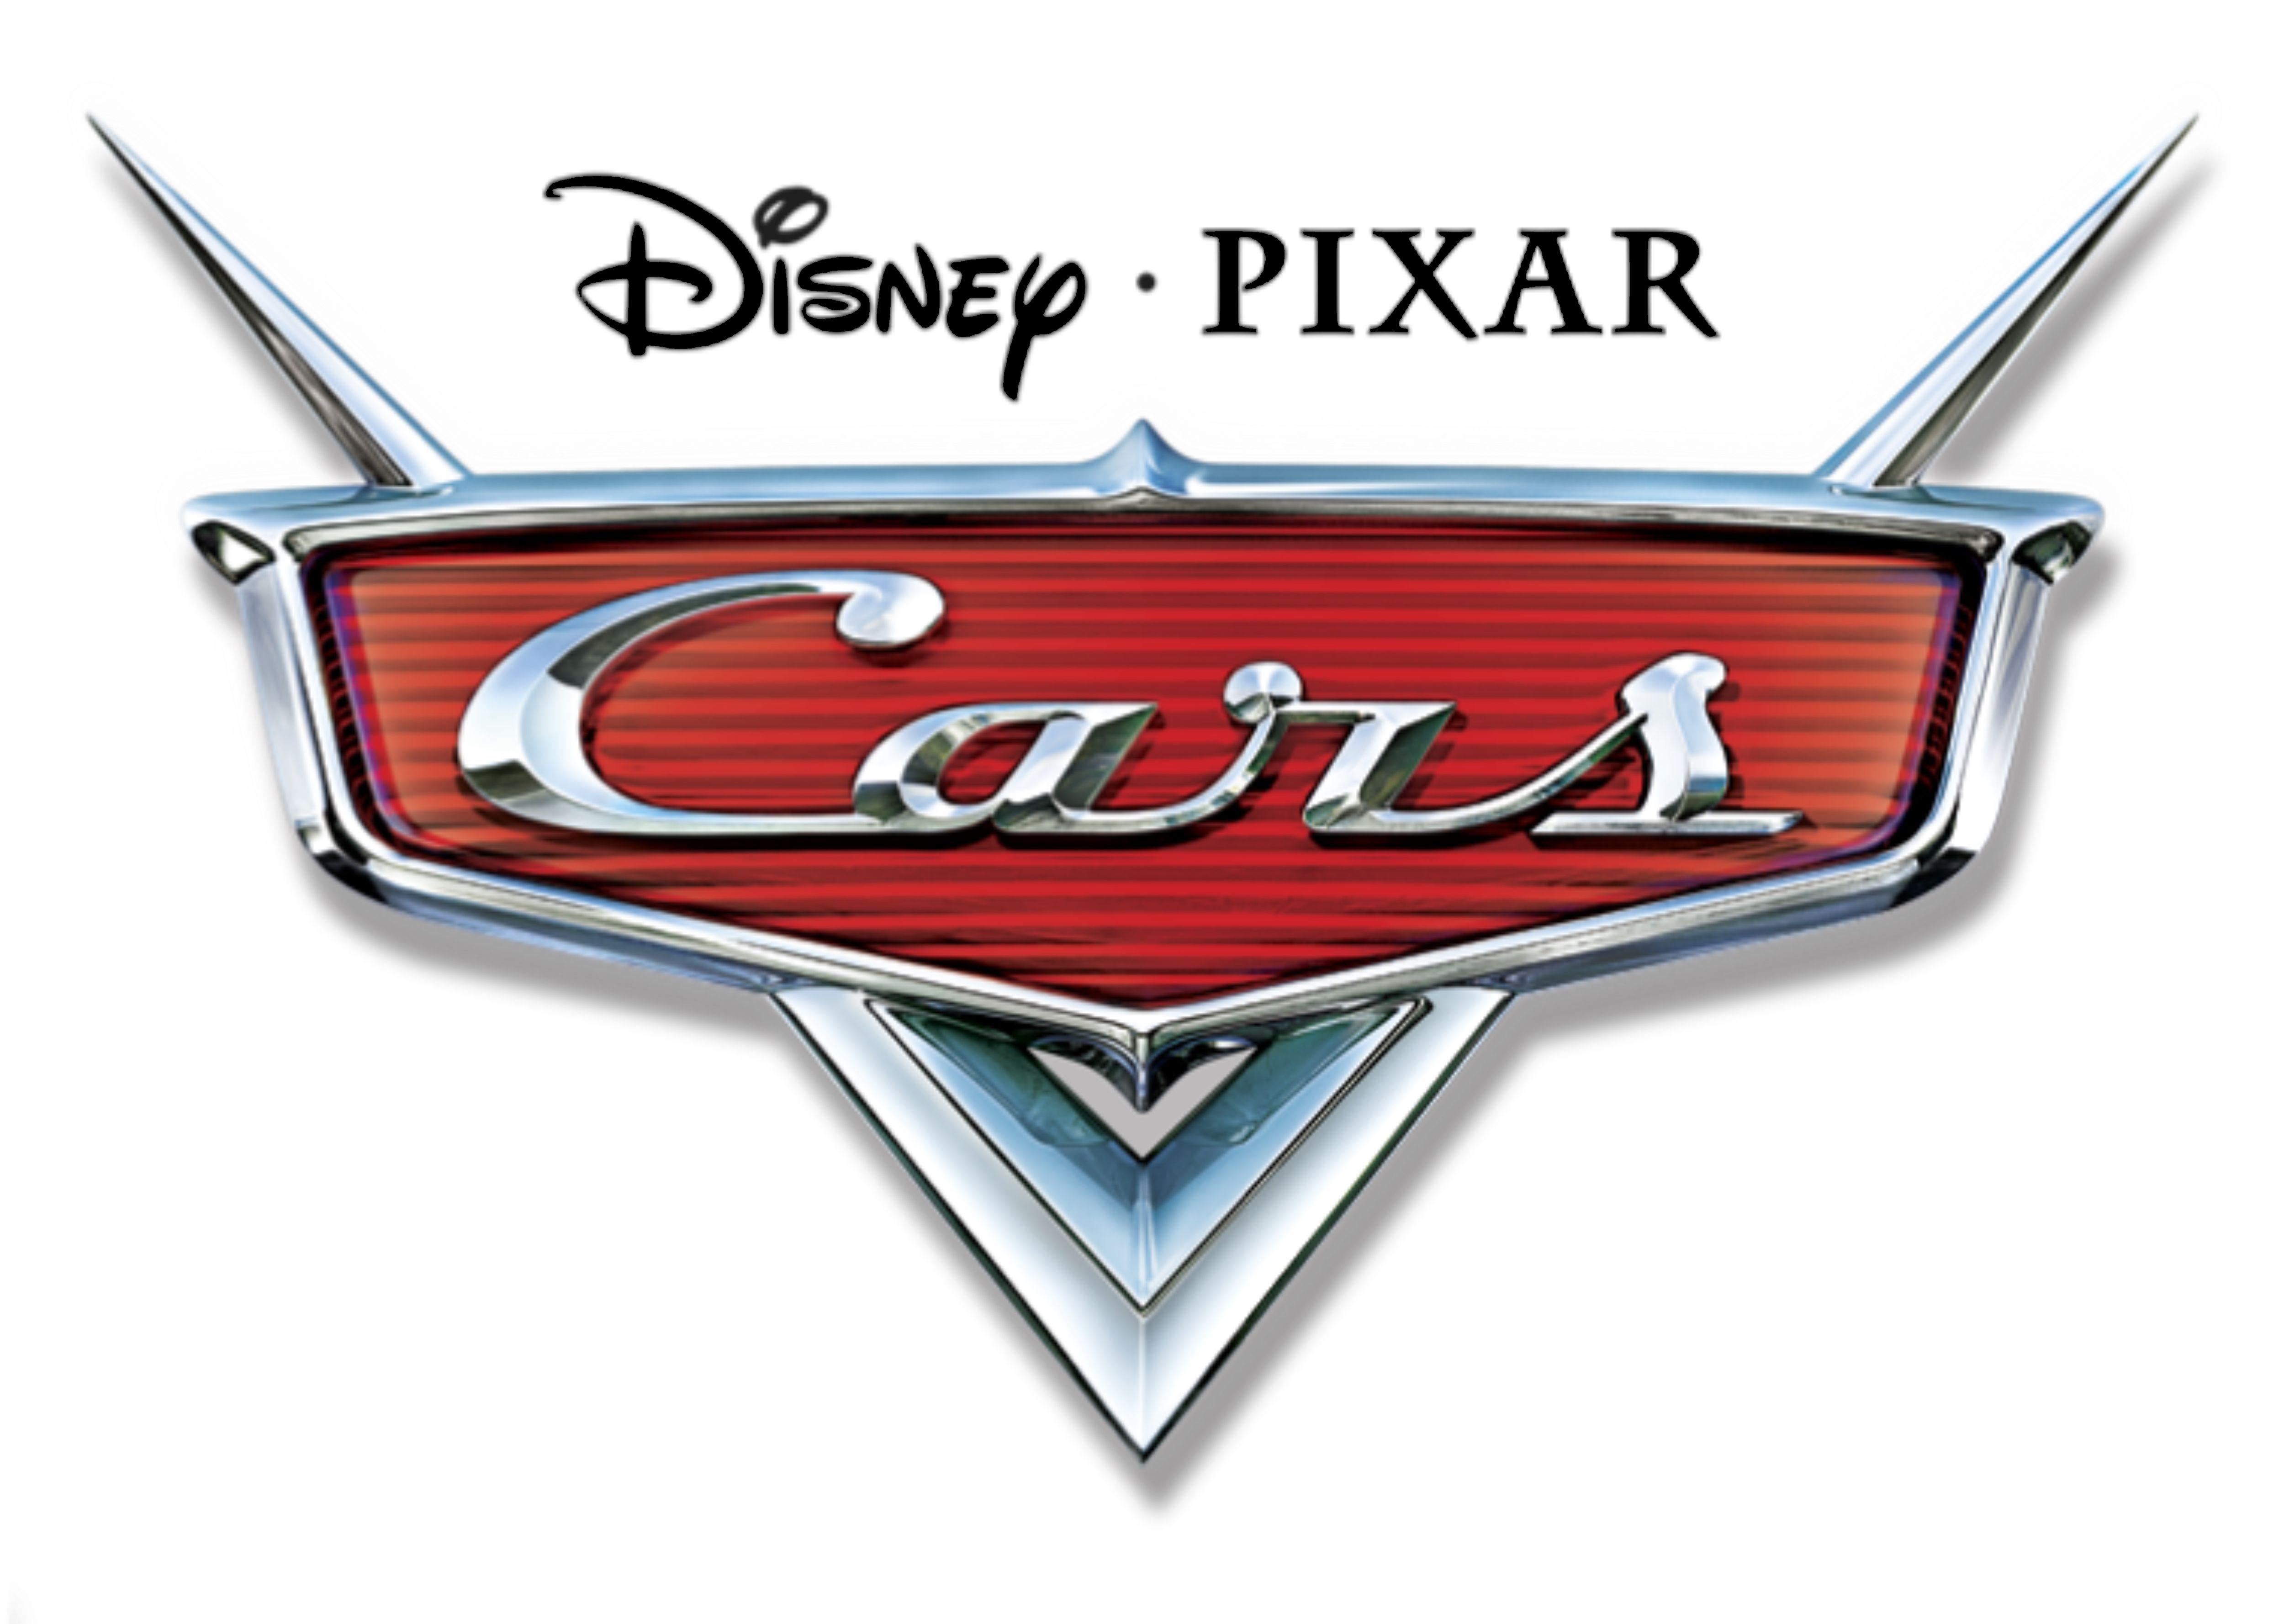 Disney Pixar Logo - Cars (Disney Pixar) – Logos Download